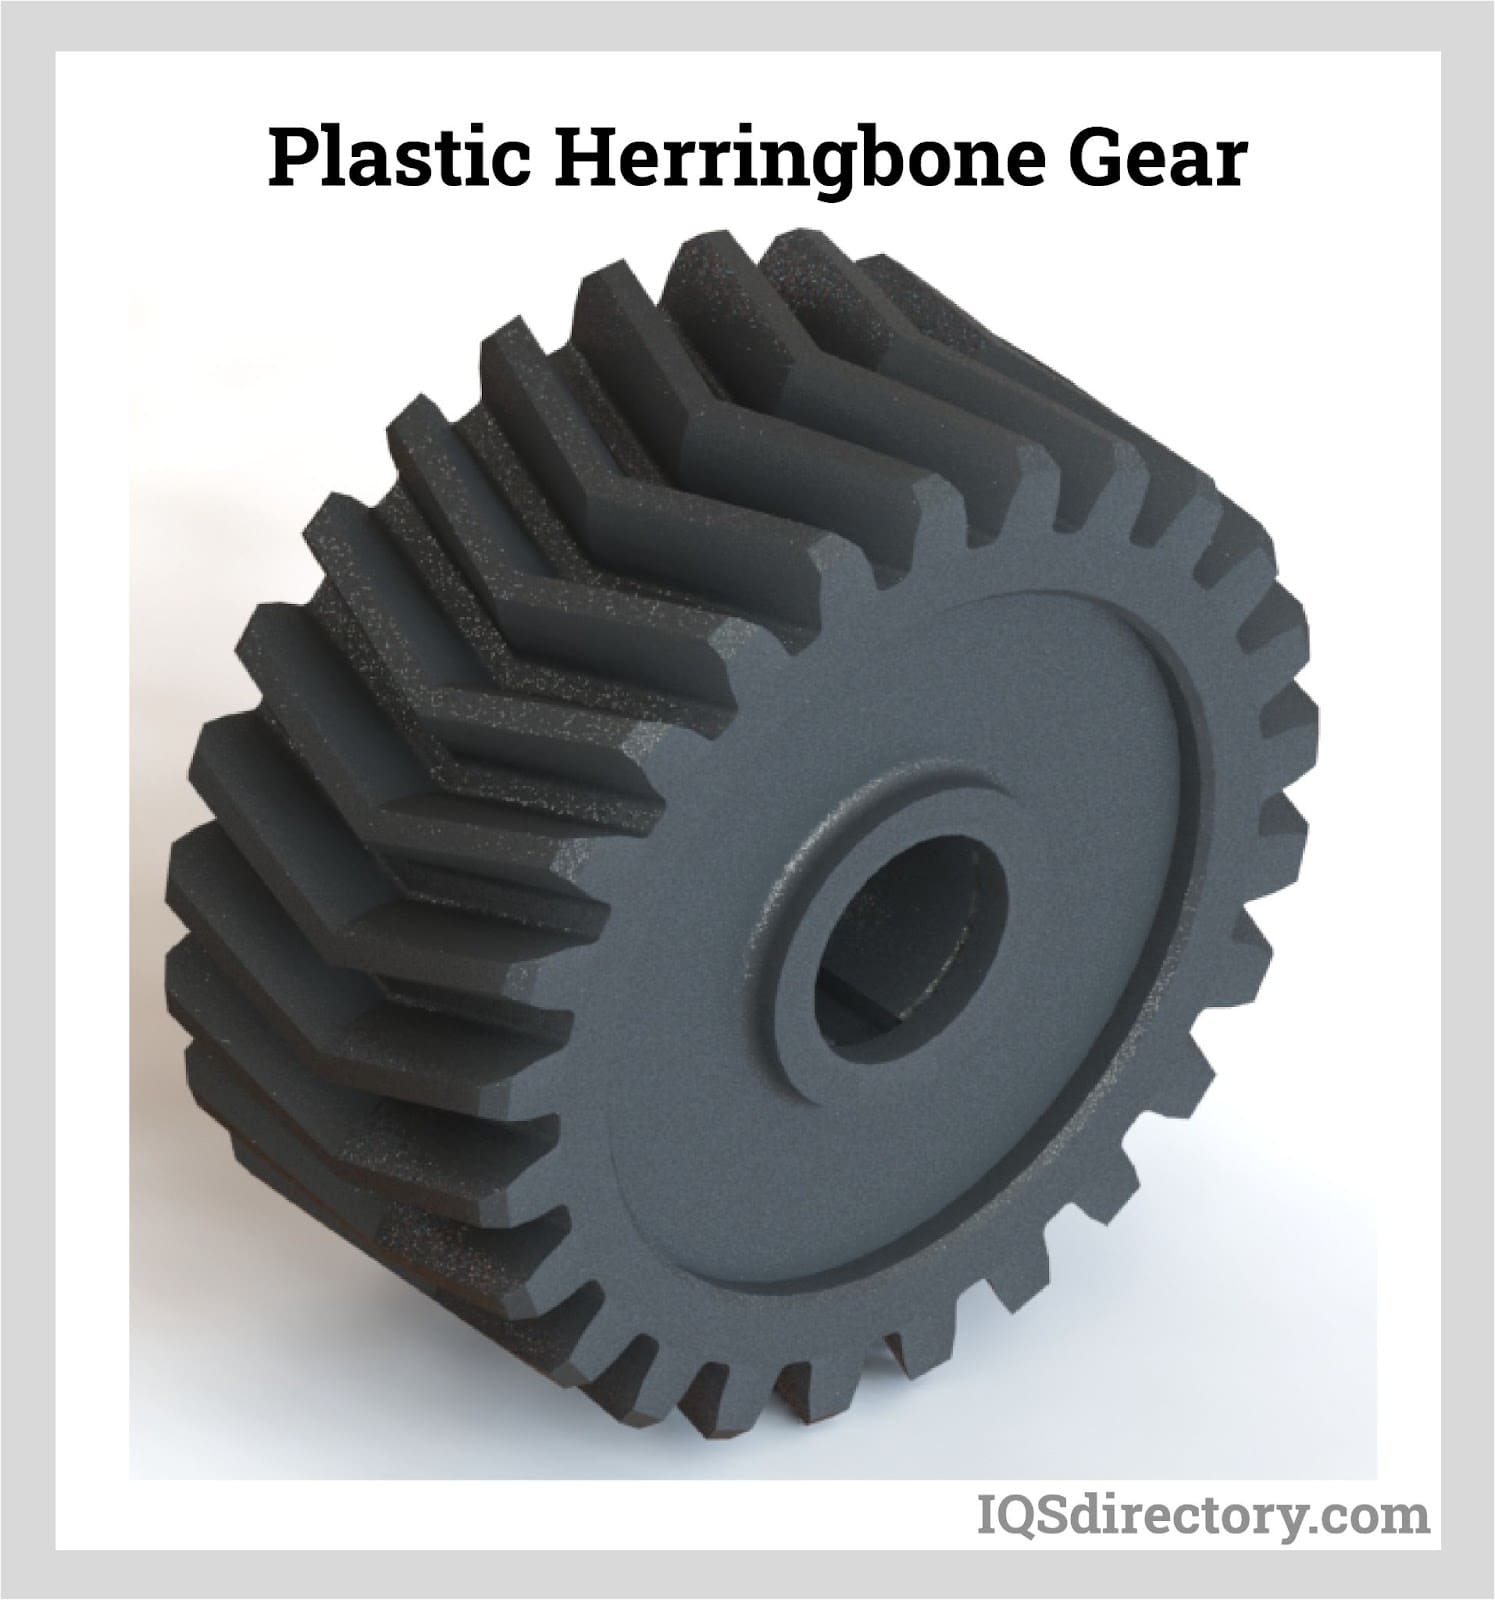 Plastic Herringbone Gear